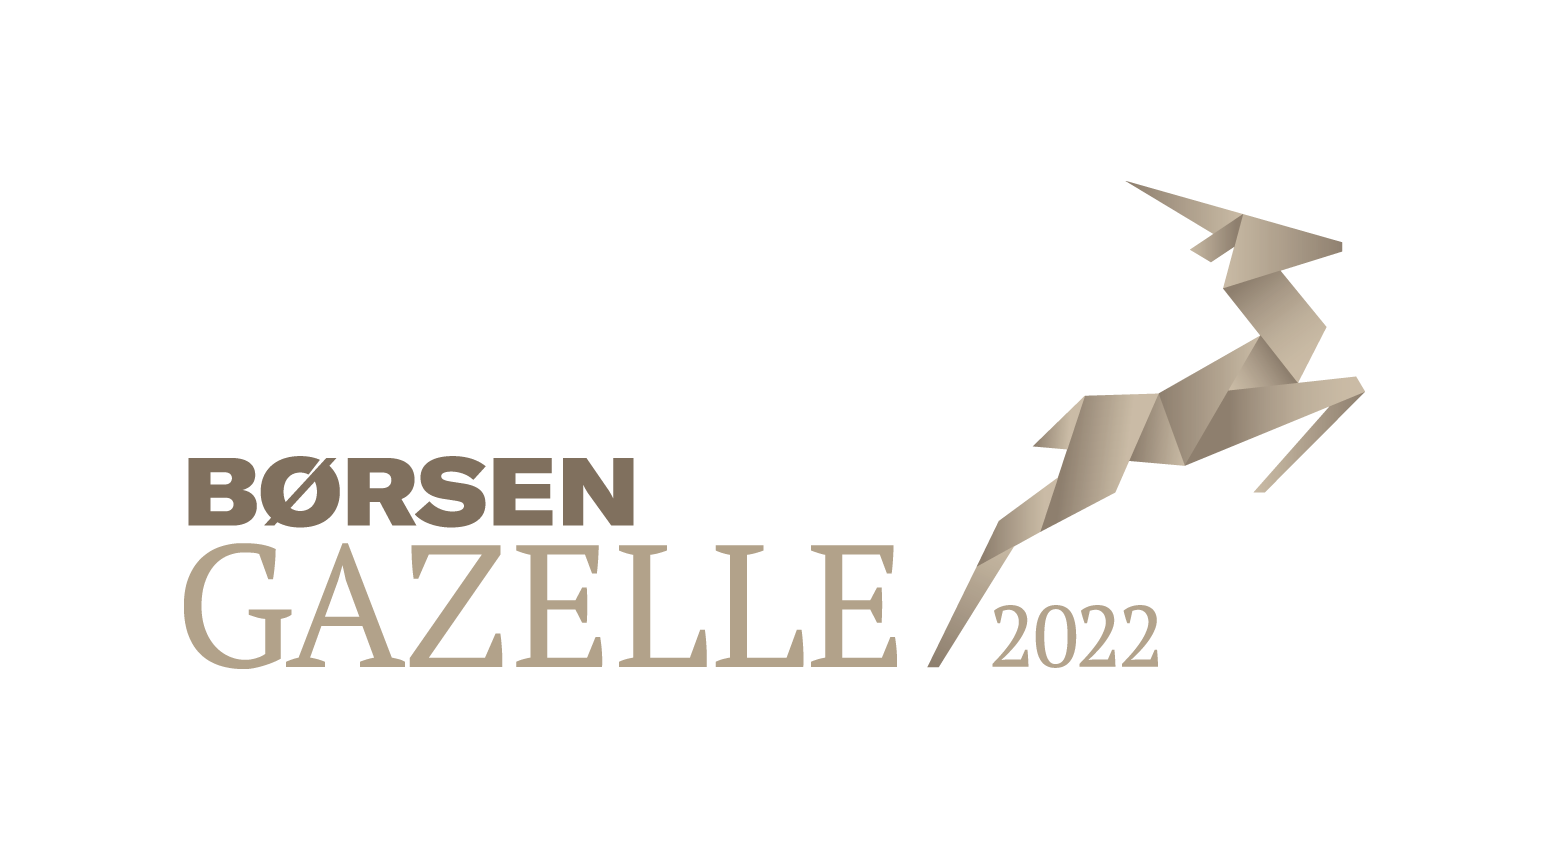 Børsens Gazelle 2022